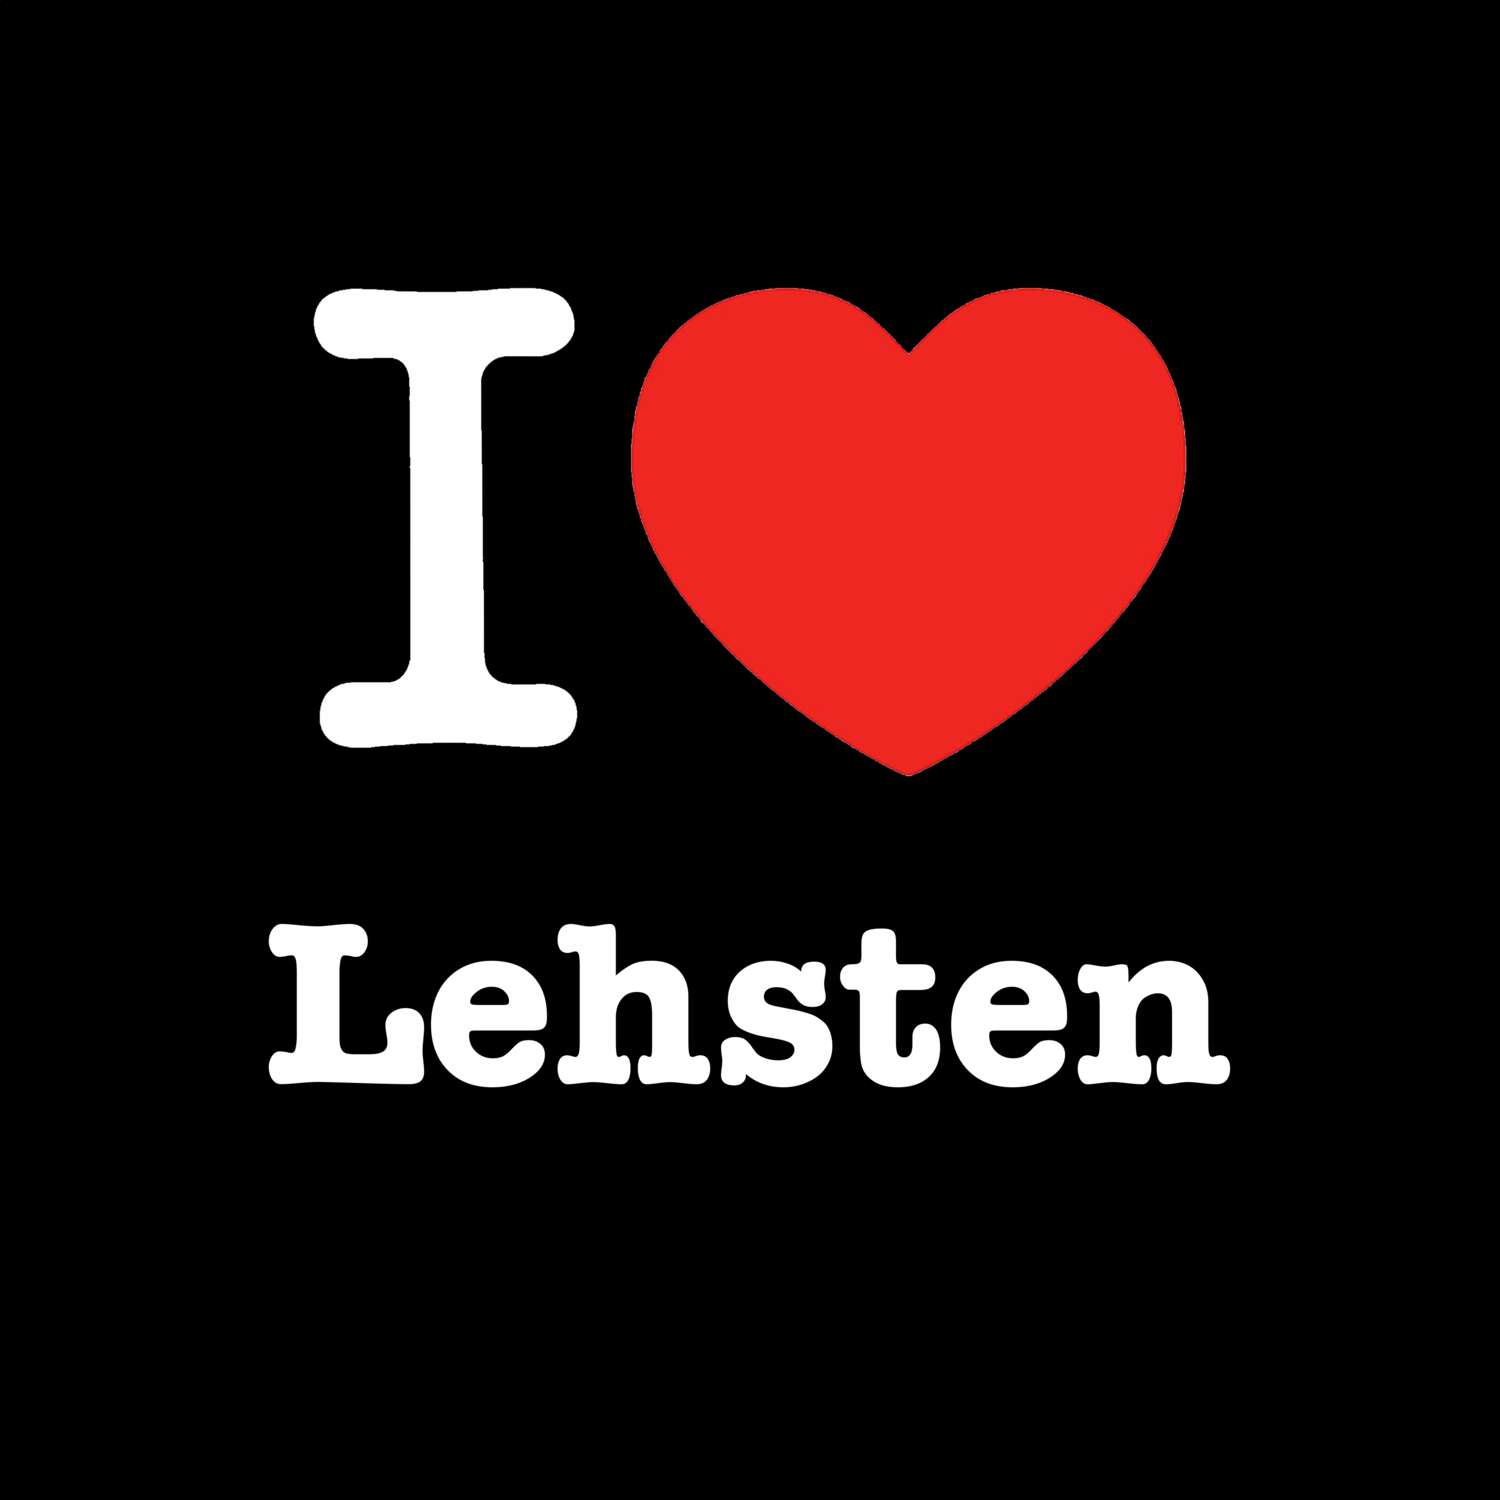 Lehsten T-Shirt »I love«